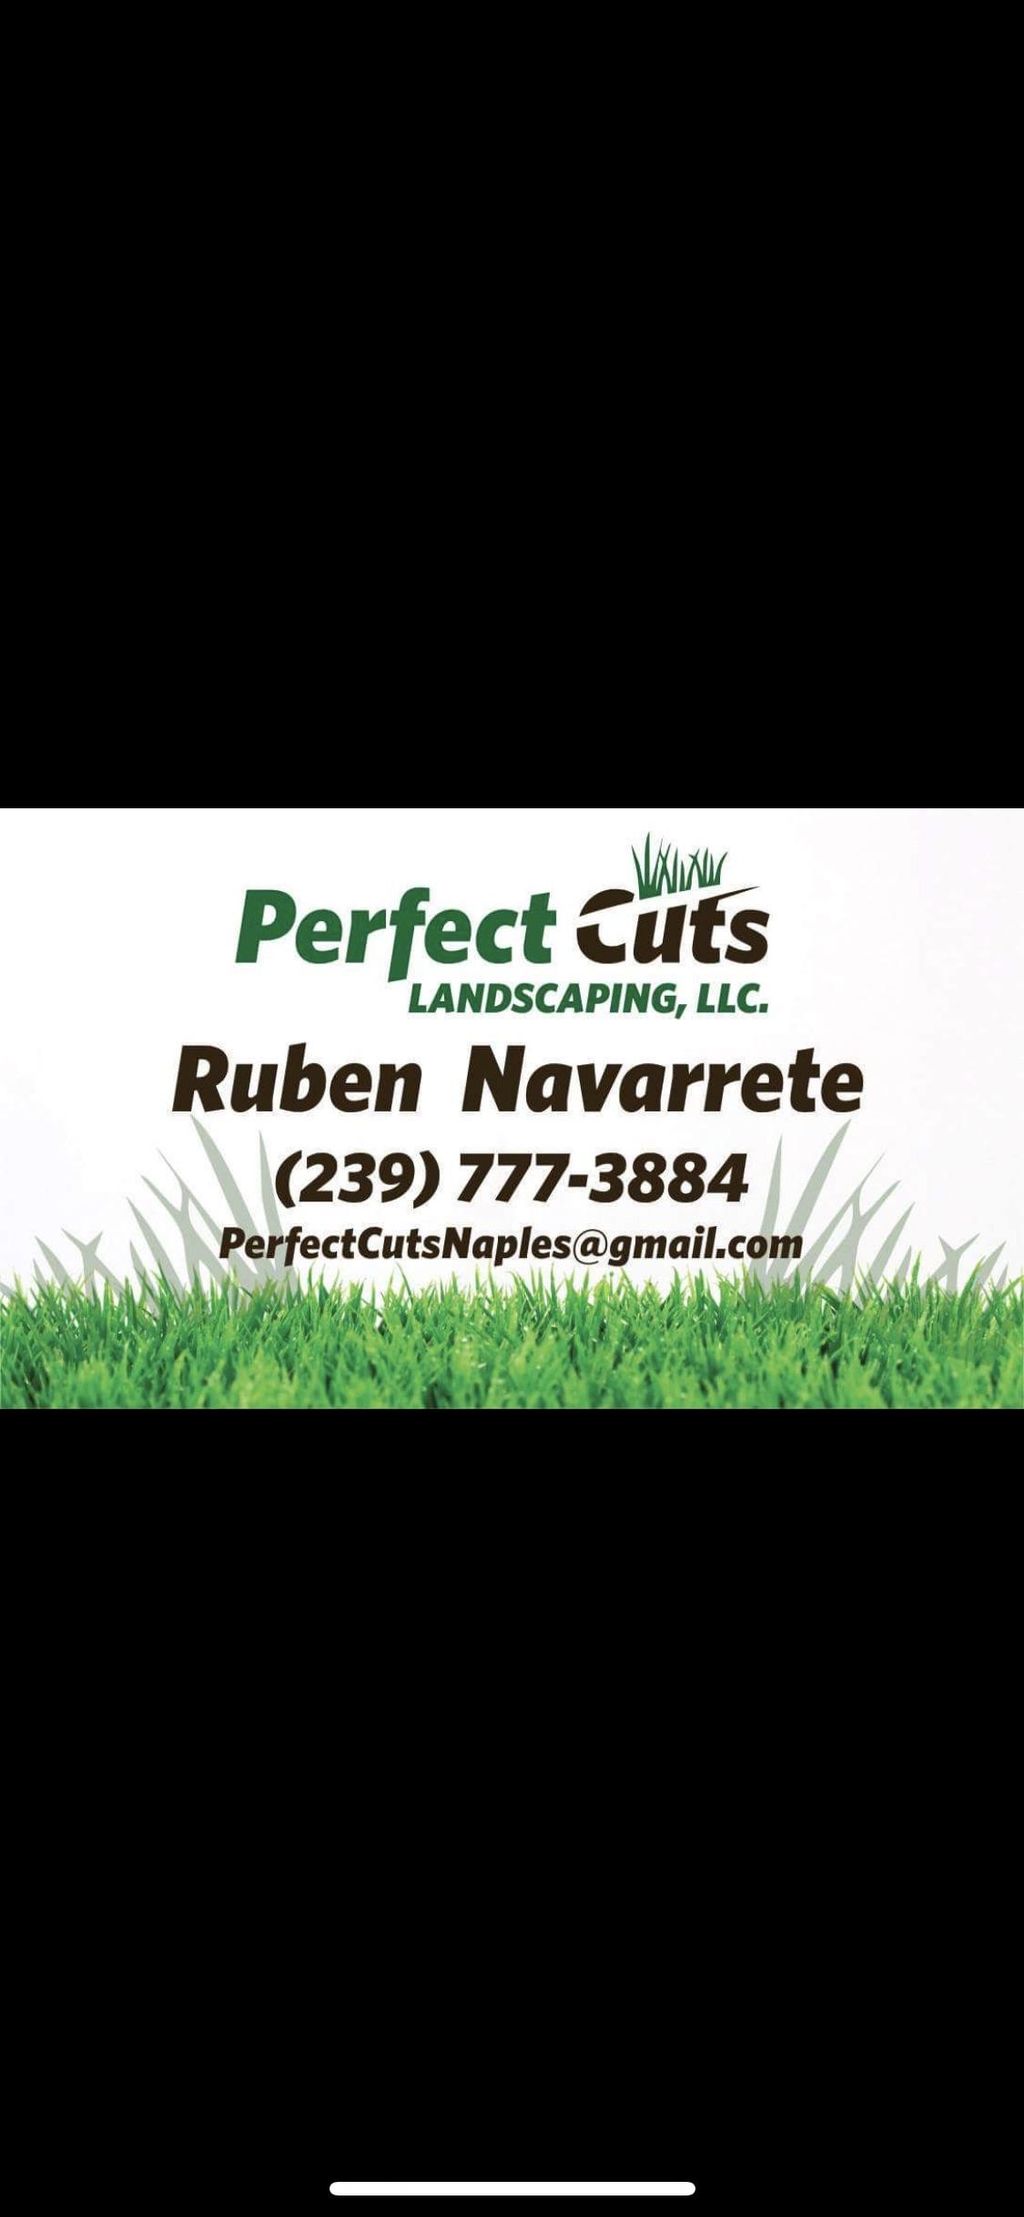 Perfect cuts landscaping llc